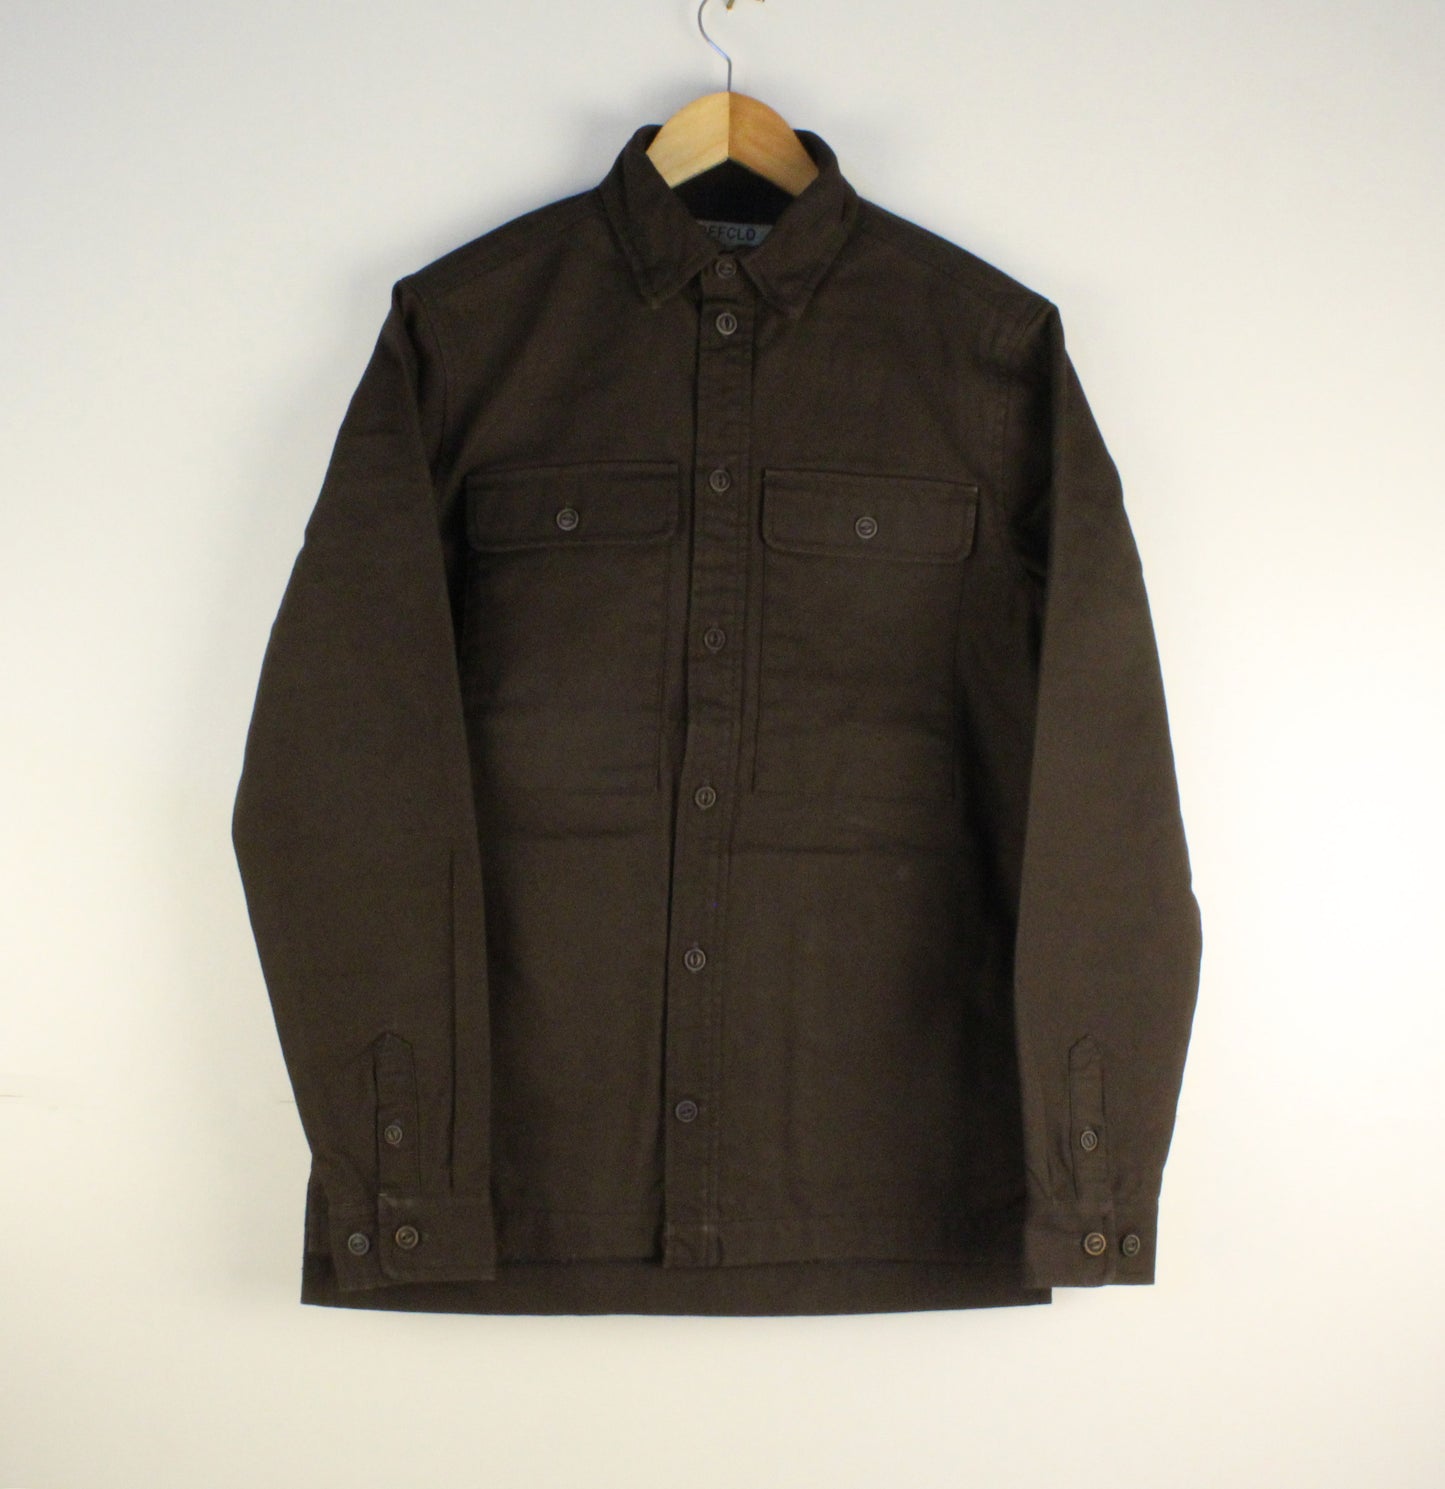 Rough & Rugged Jacket for Men - Dark Brown